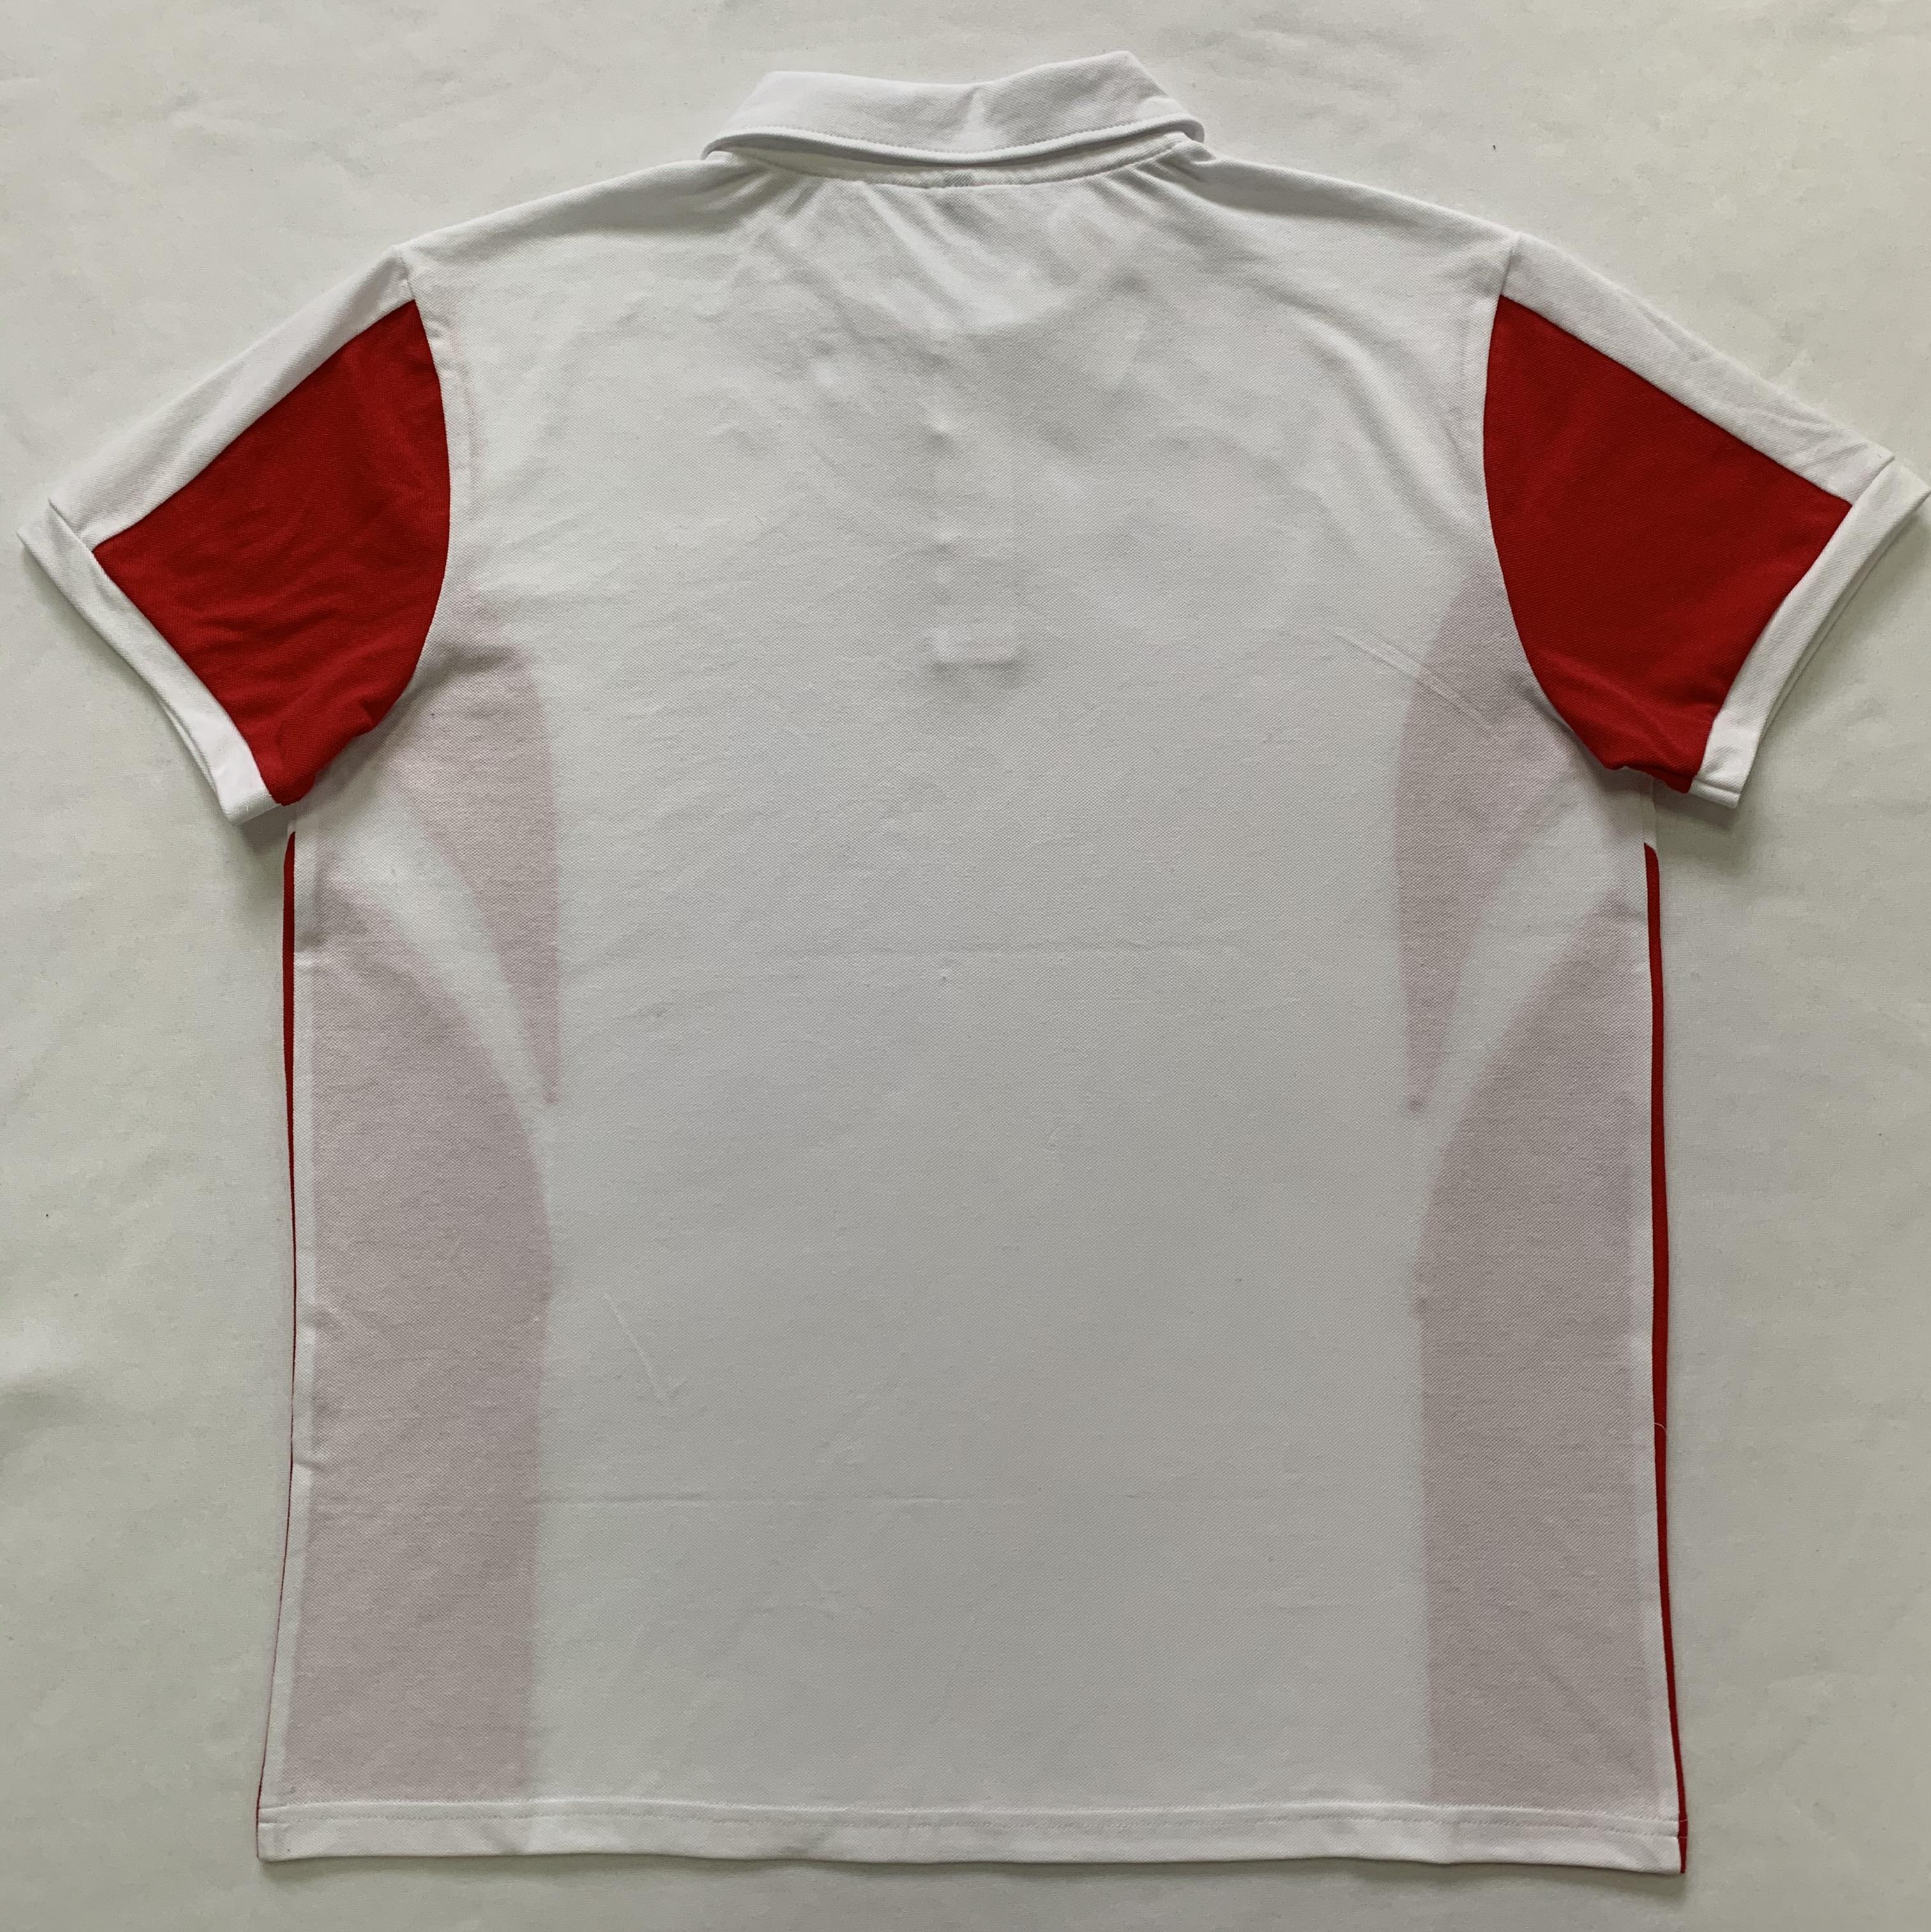 2custom performance advertising red white polo shirt